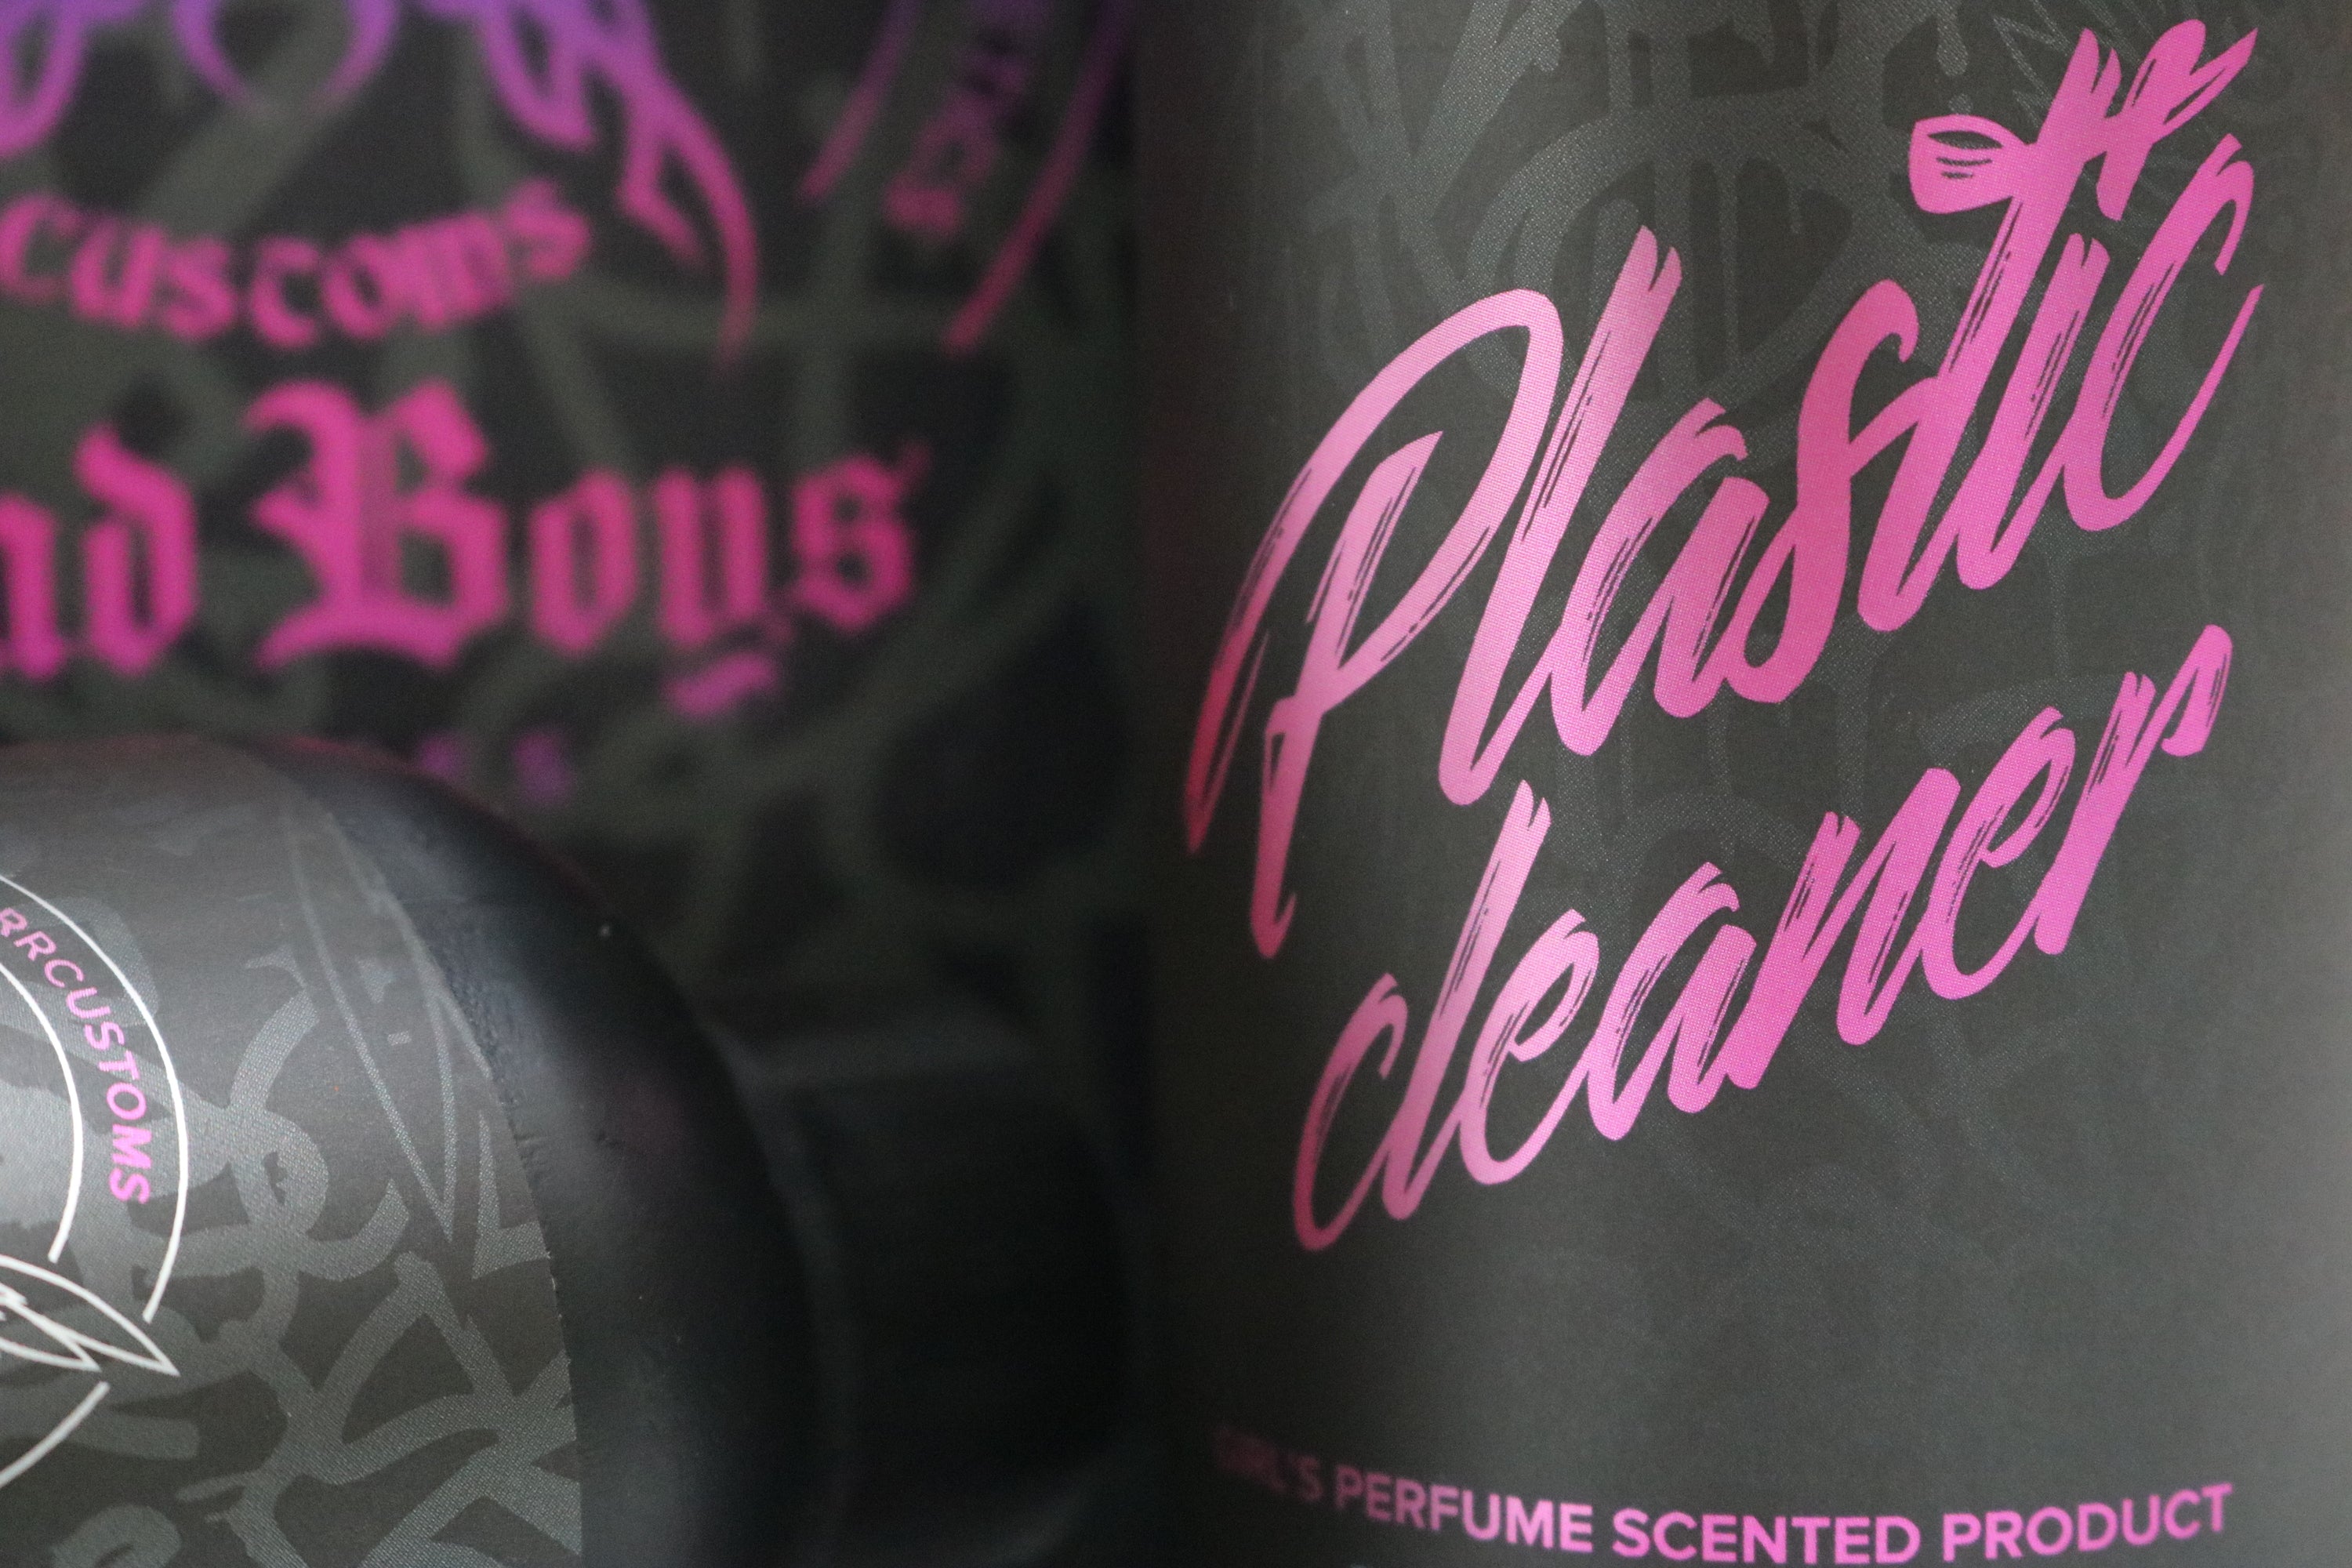 RR Customs Bad Boys - Plastic Cleaner Girl's Perfume Scented 500ml